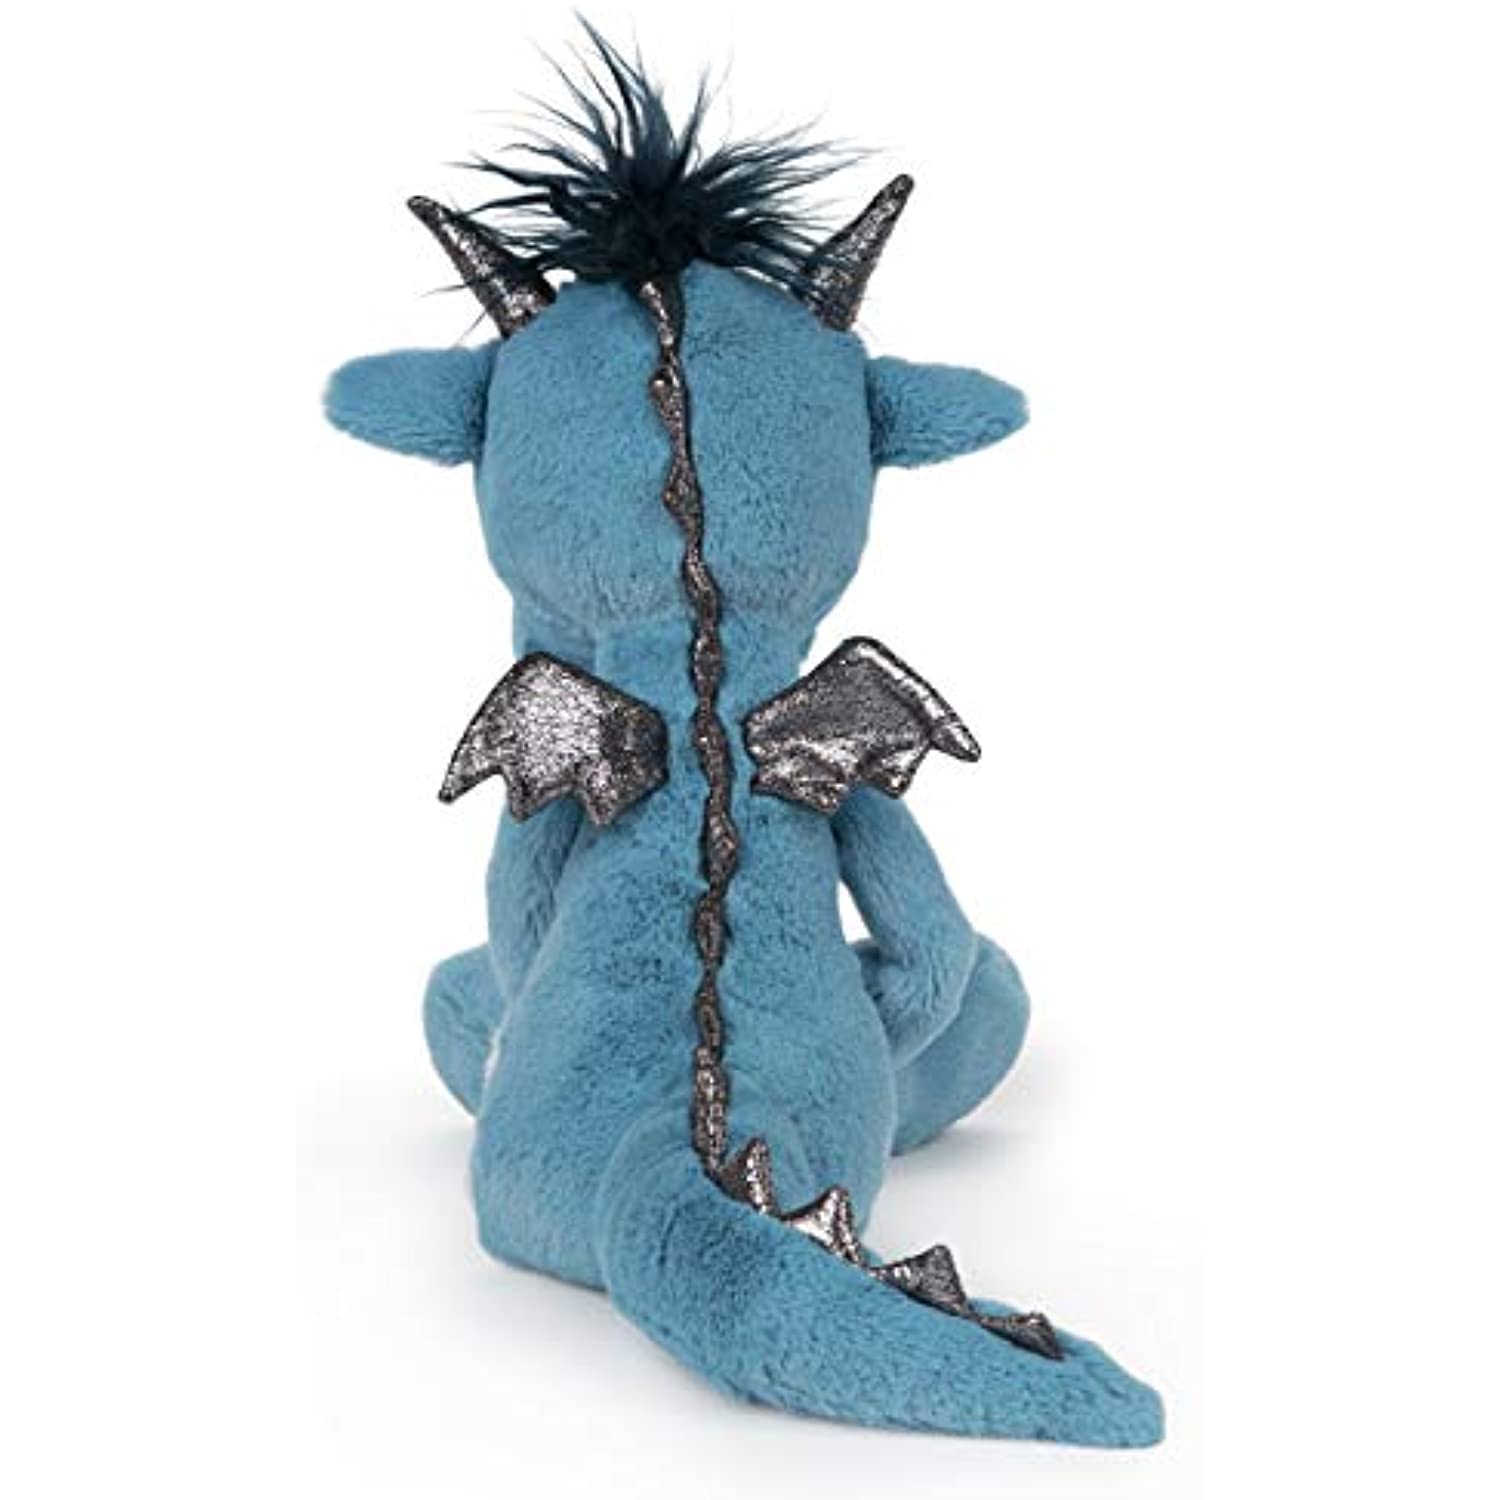 GUND Toothpick Asher Dragon Plush Stuffed Animal, Blue, 15"